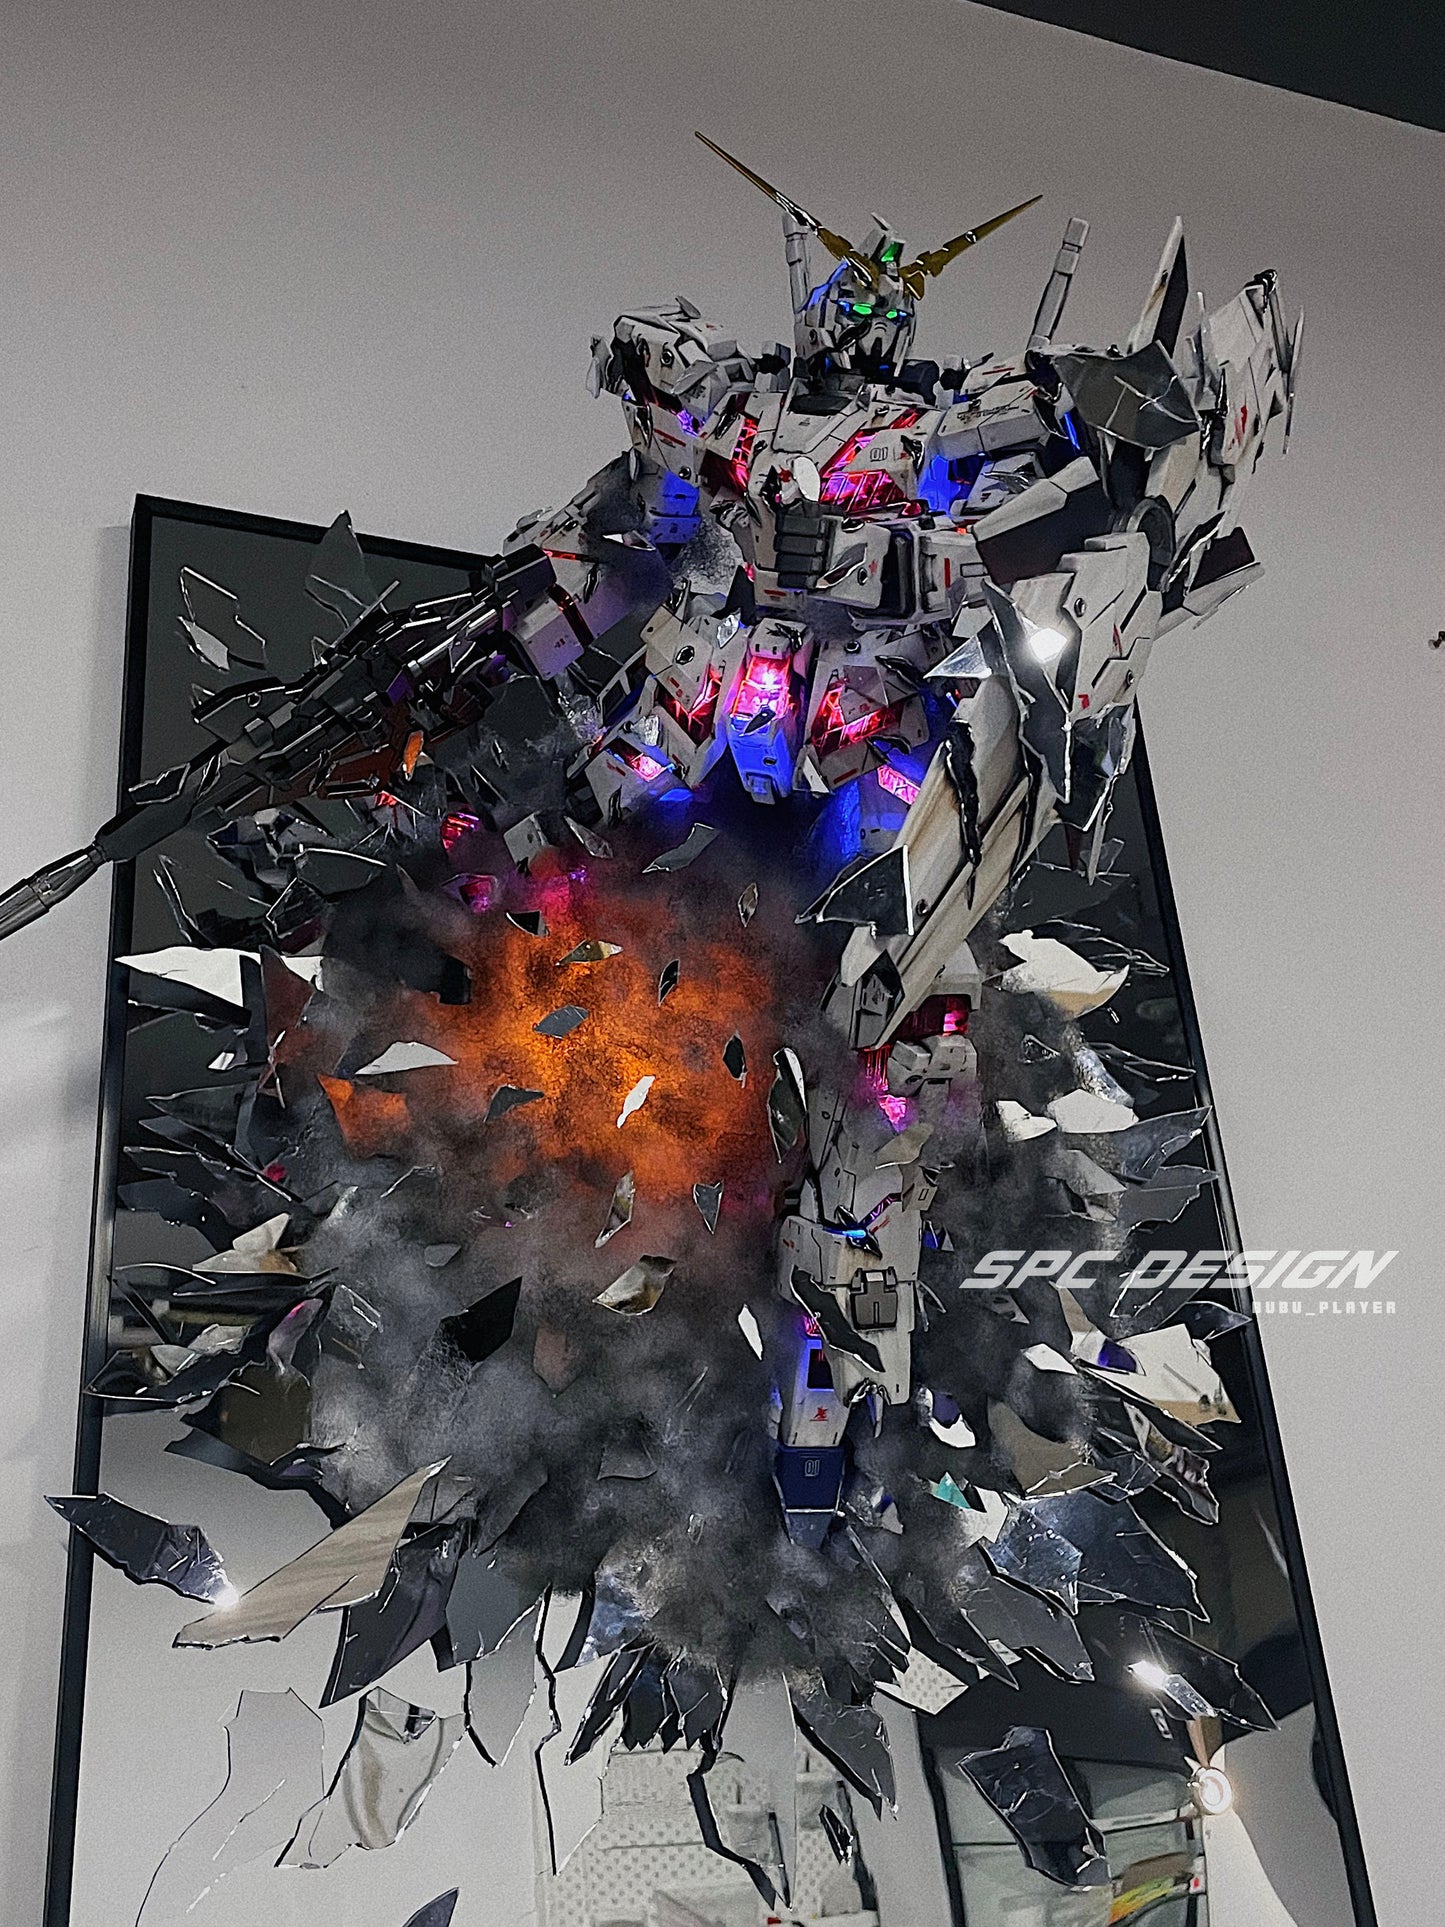 Fancy unicorn Gundam with broken mirror 1:48 mega